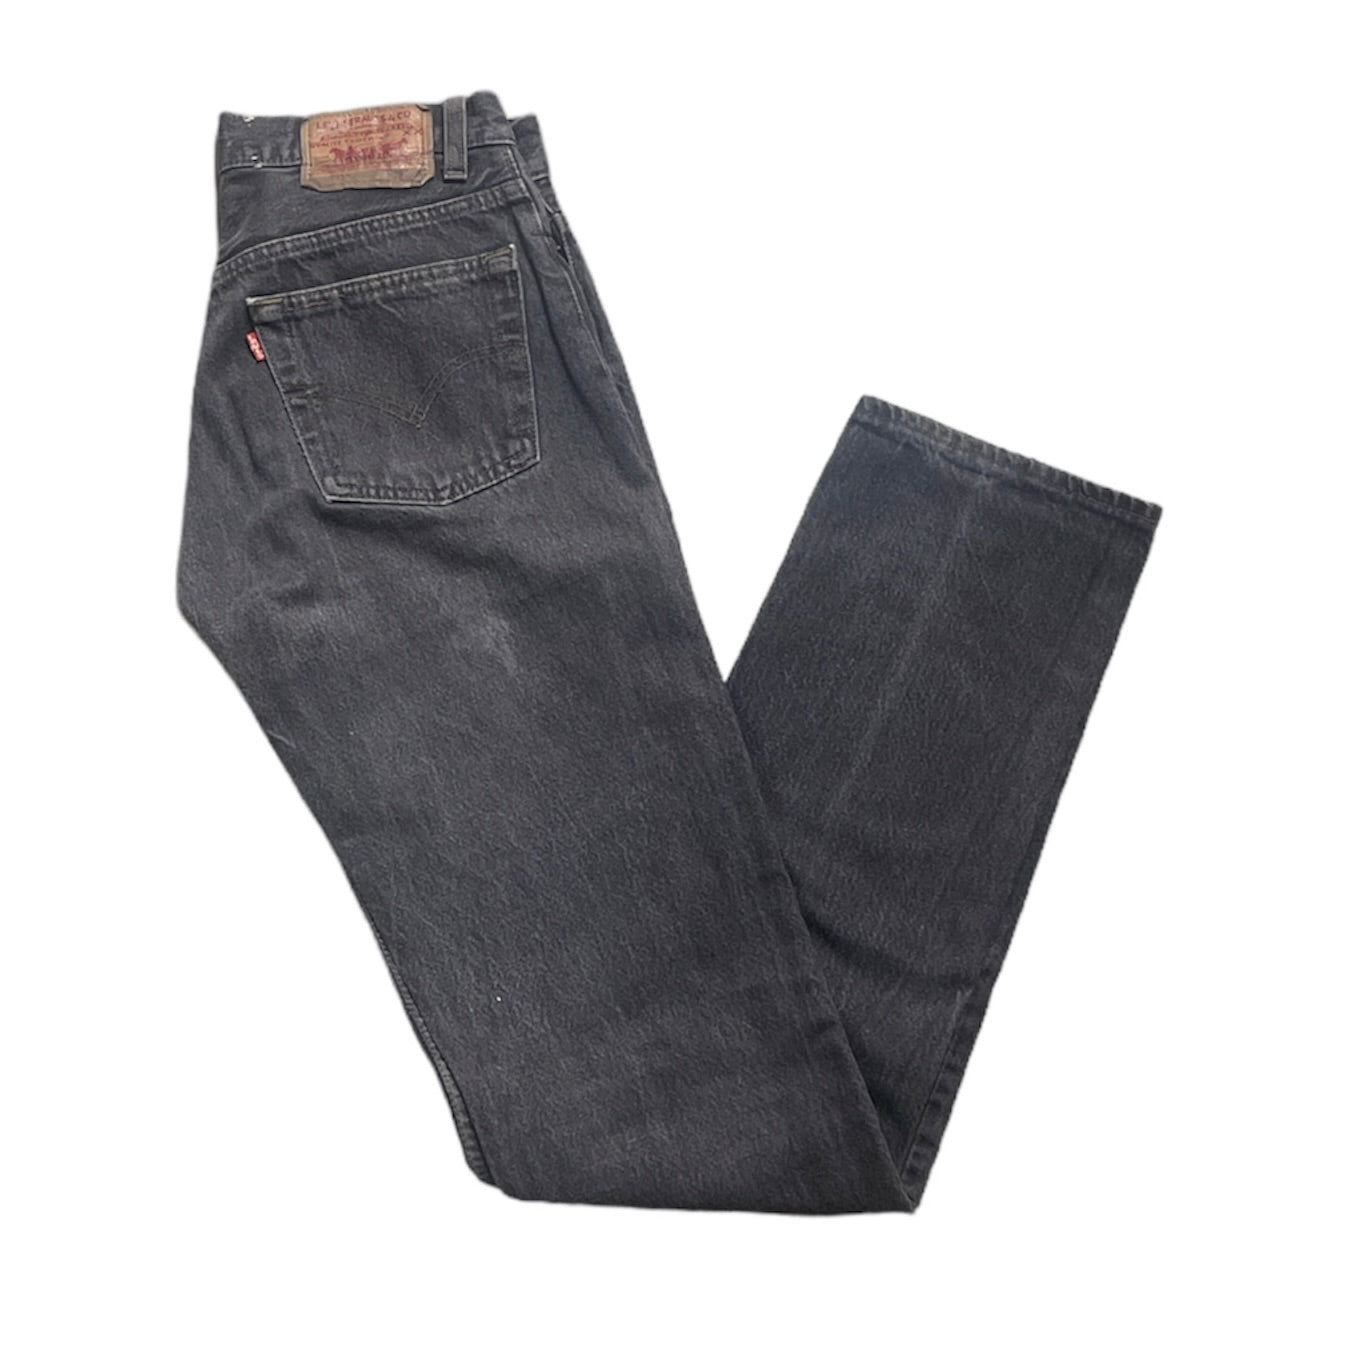 Vintage Levis 501 Vintage Grey Jeans (W28/L36)